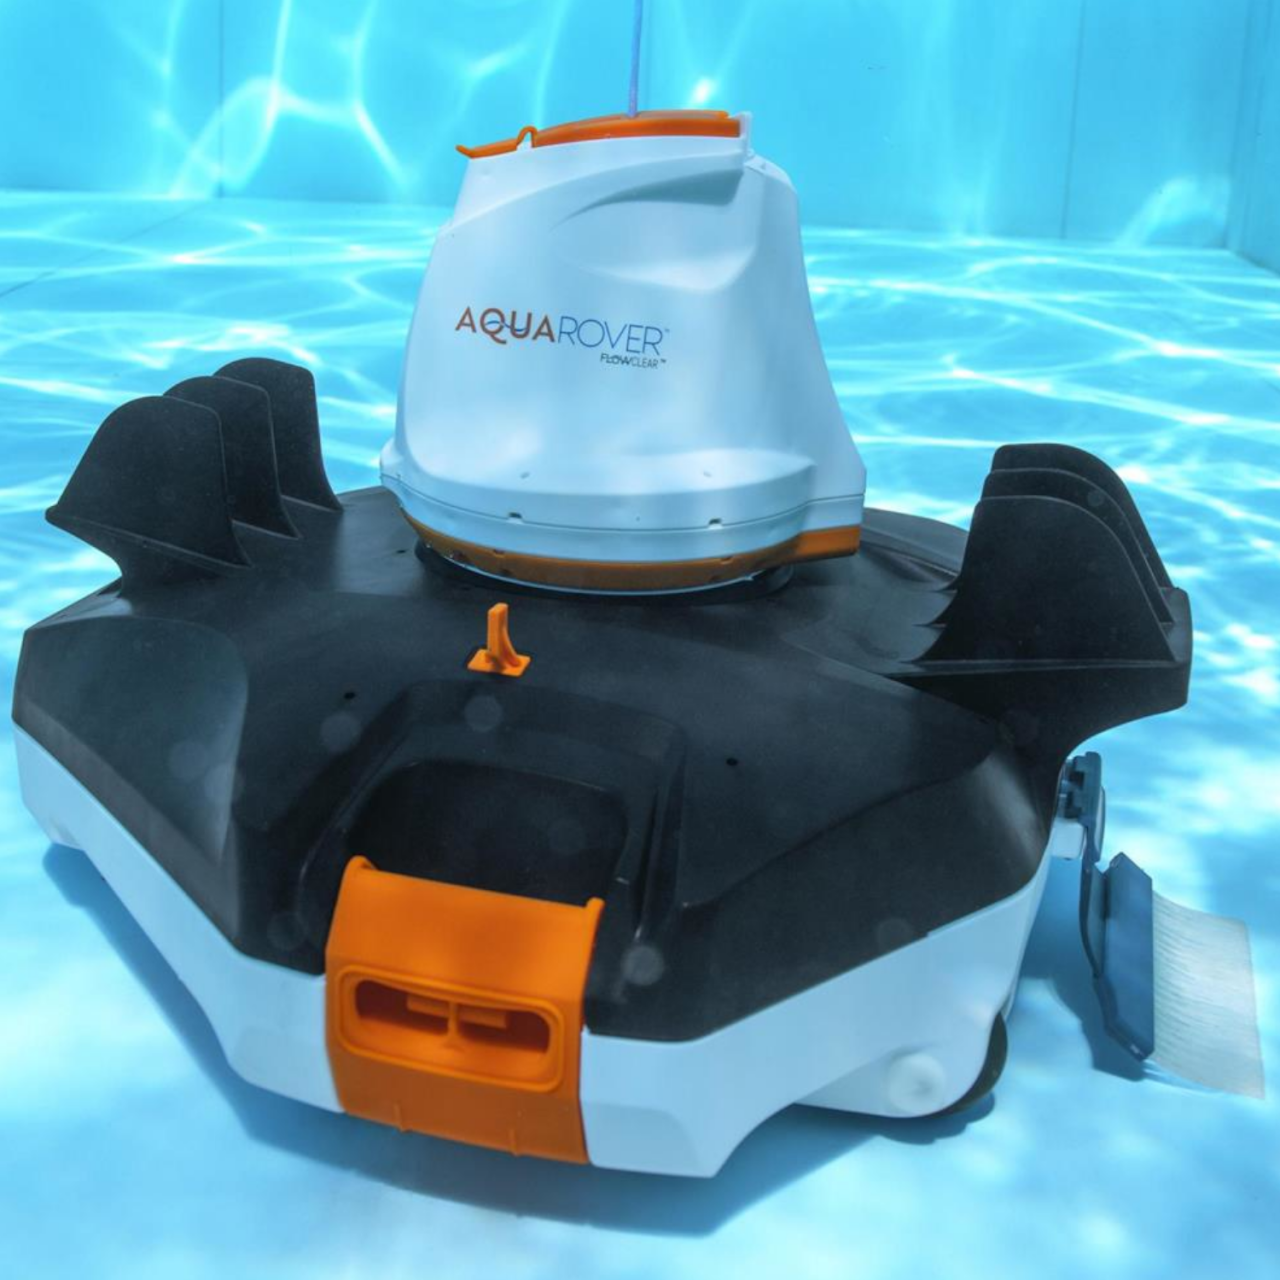 Bestway 58622 Flowclear akkubetriebener Poolsauger AquaRover Roboter Bodensauger